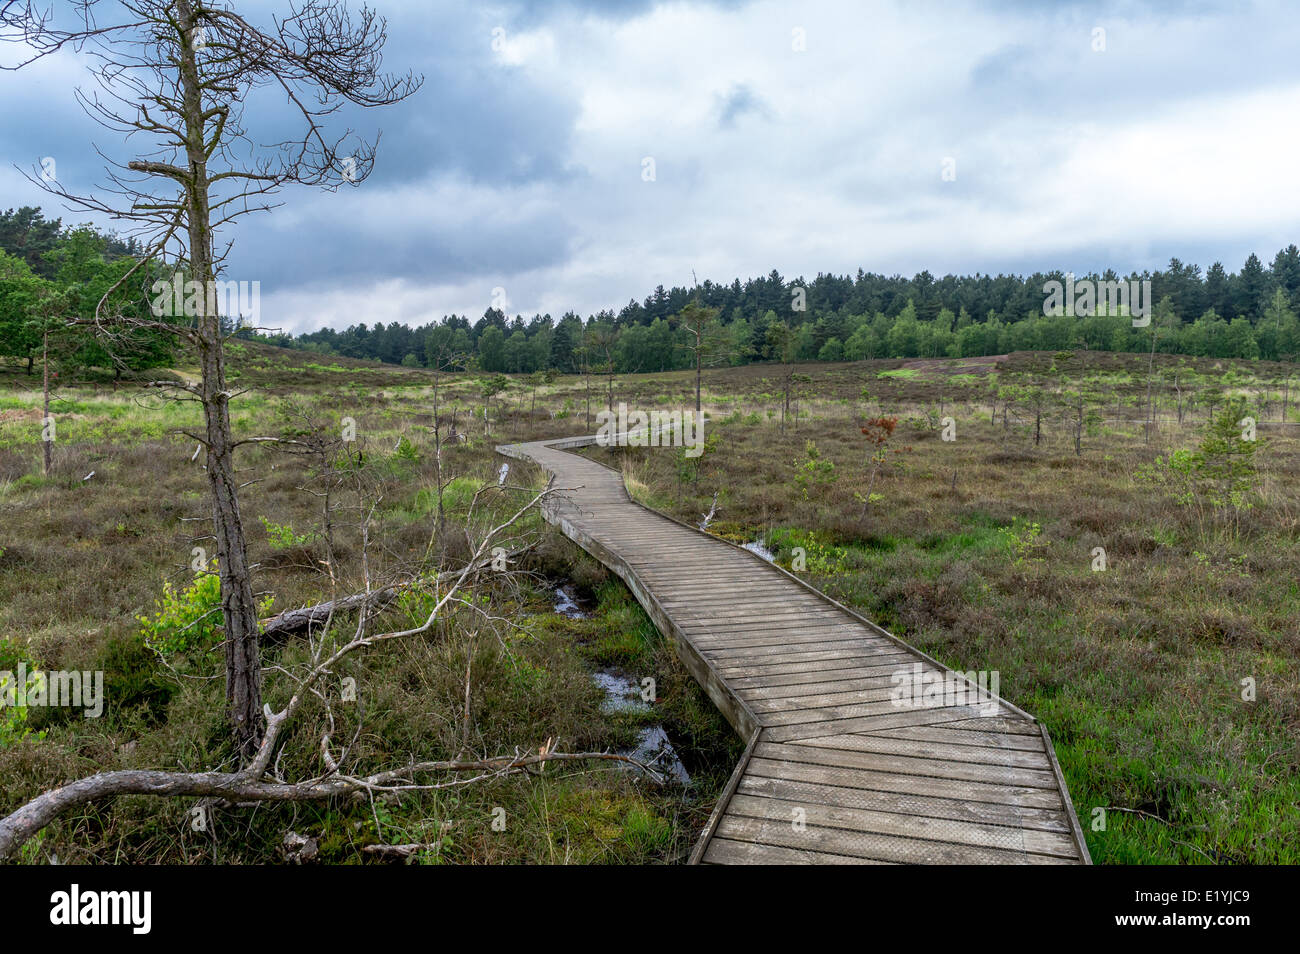 Wooden walkway across marsh land containing rare plant life. Stock Photo